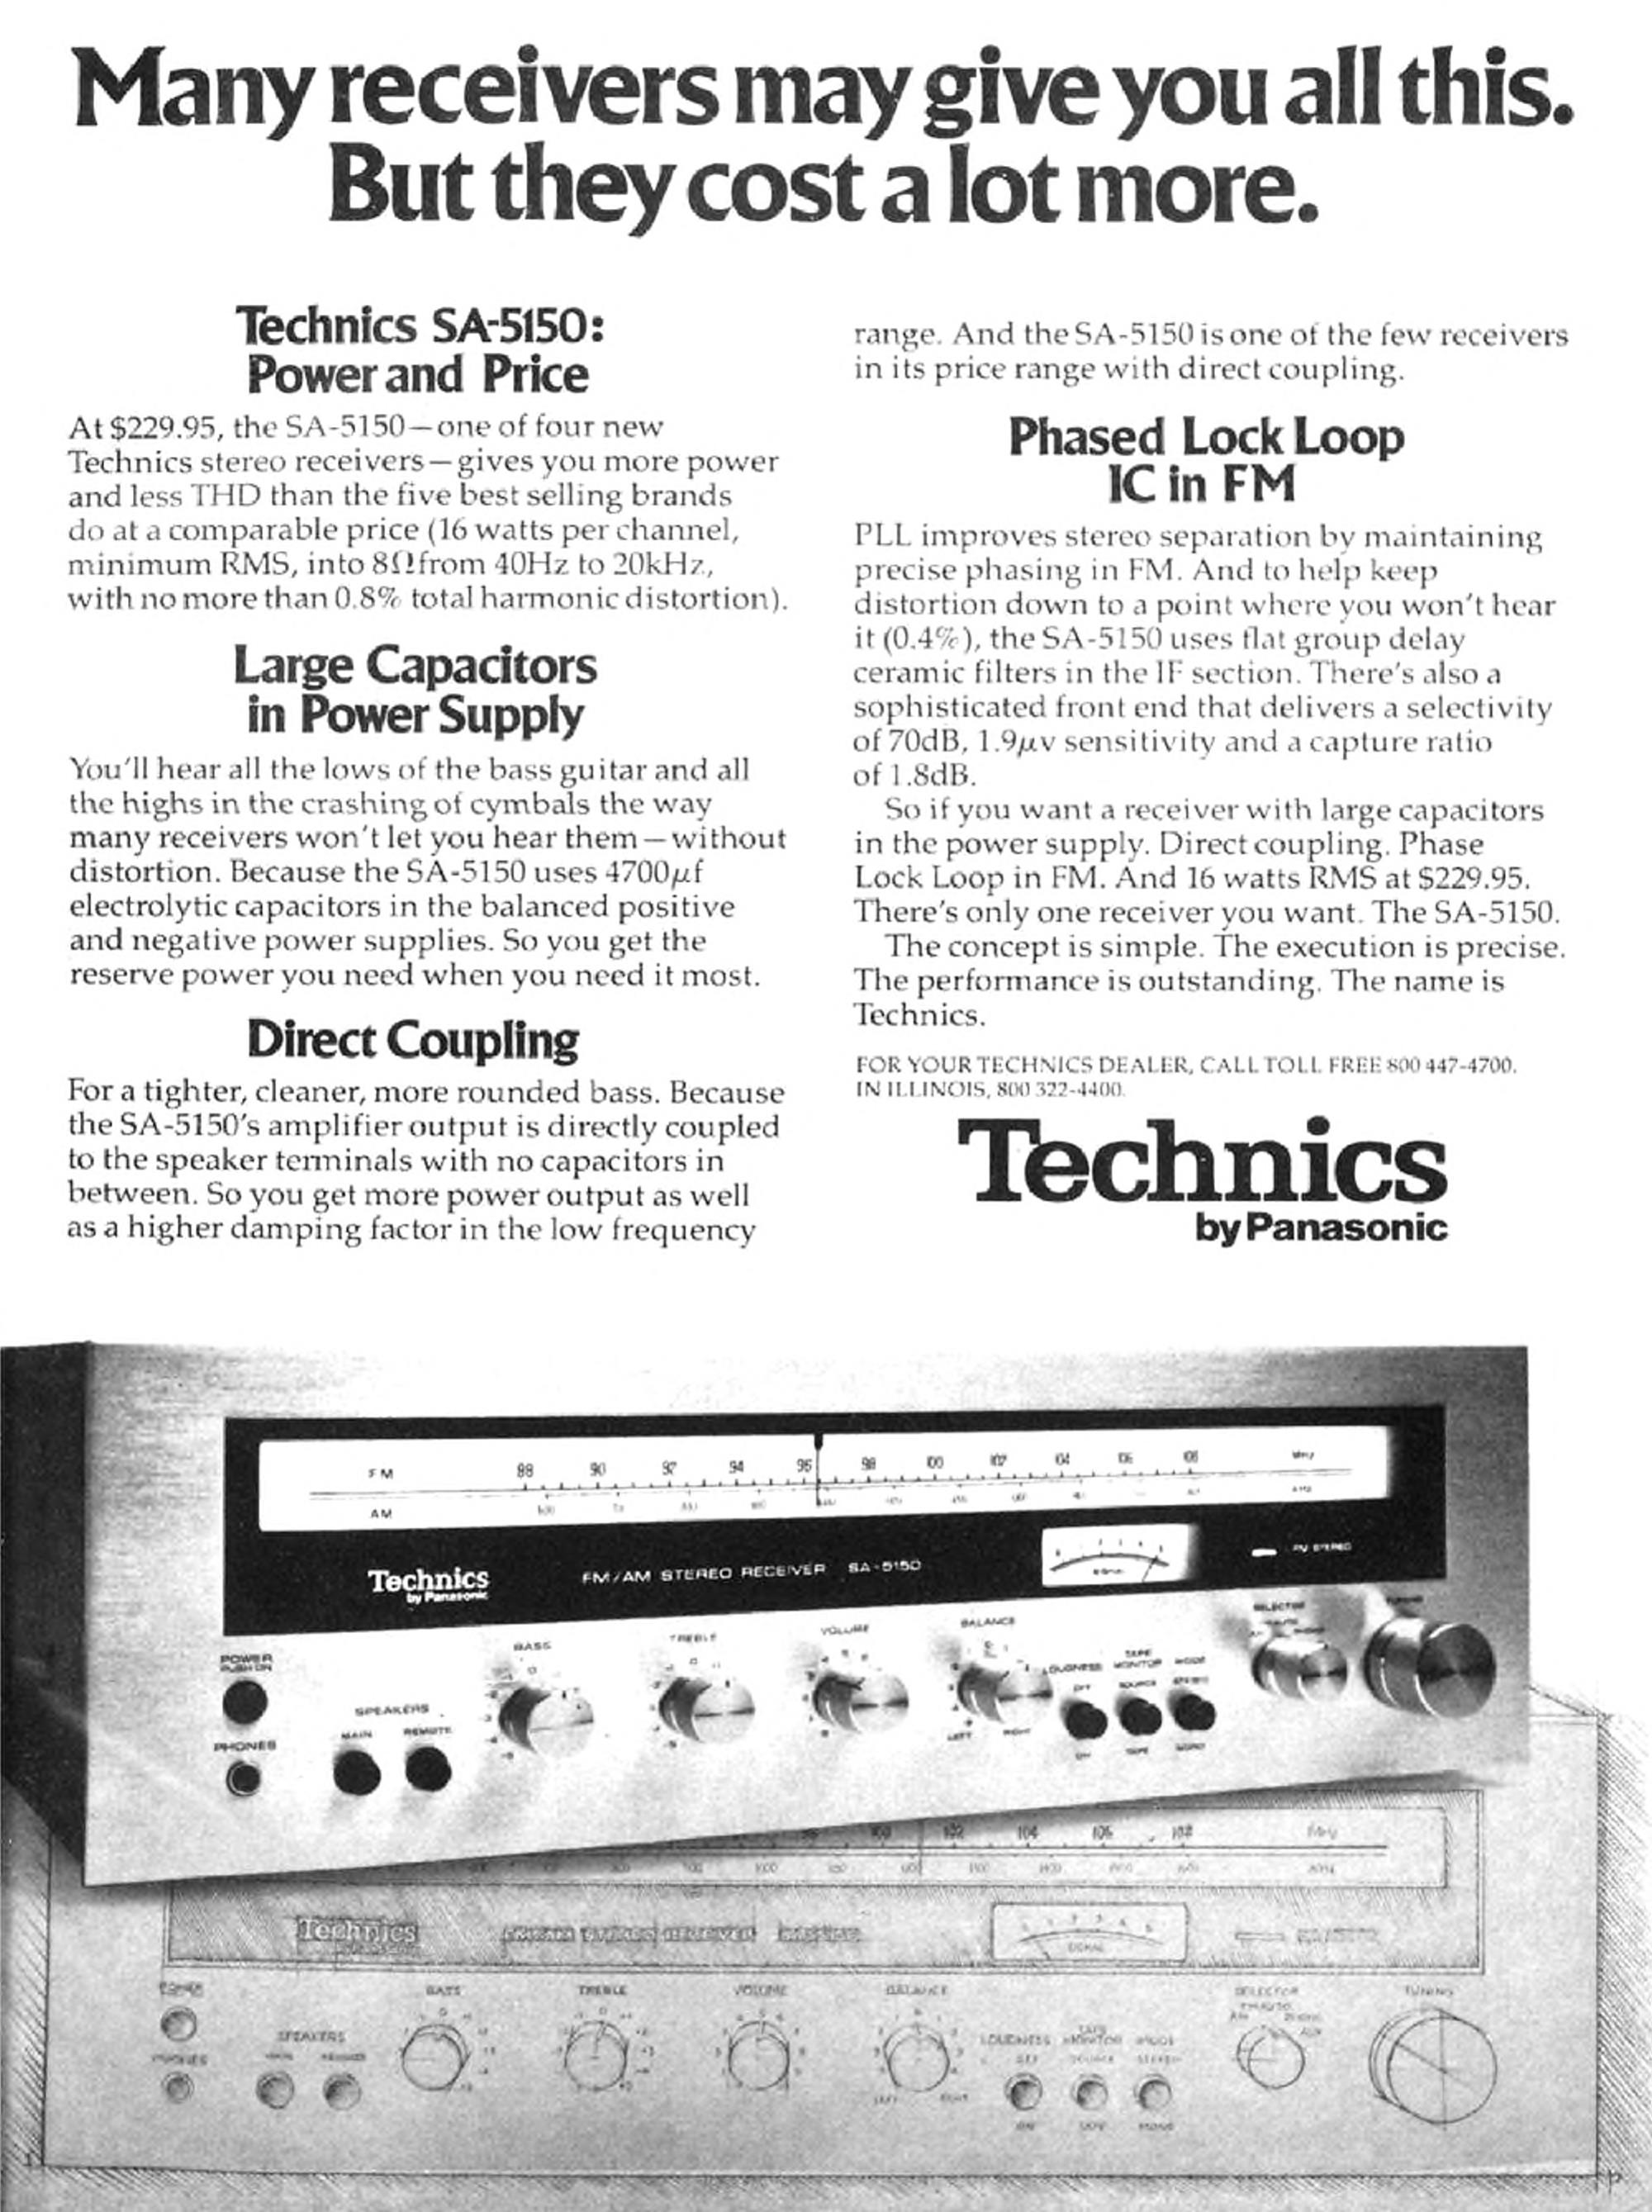 Technics 1975 1.jpg